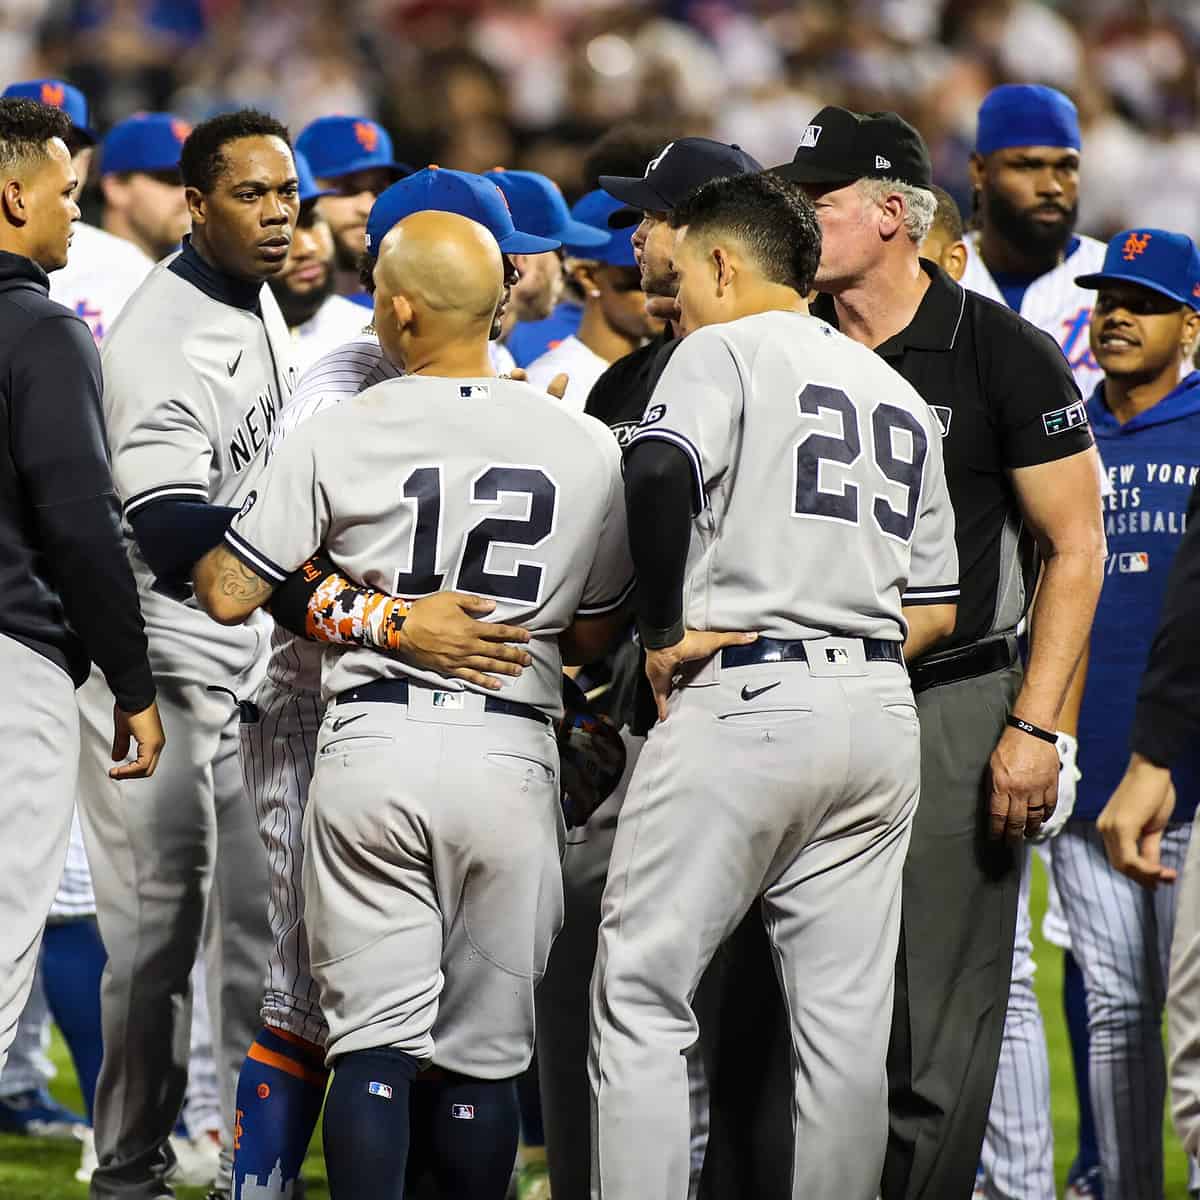 New York, New York: Mets vs. Yankees exhibition weekend is upon us